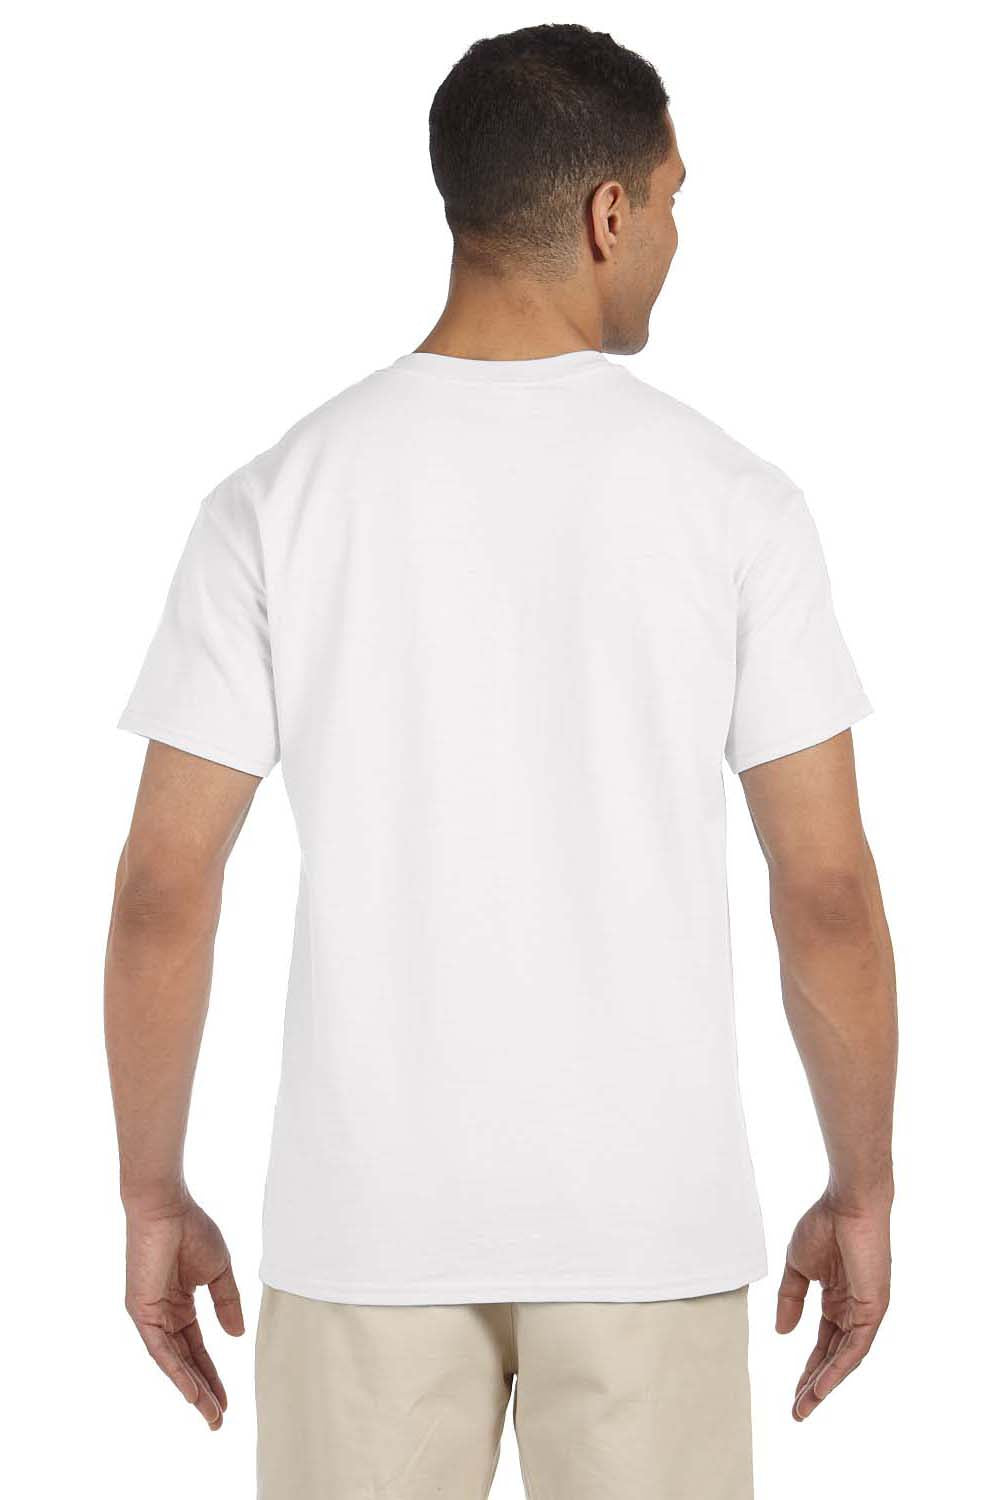 Gildan G230 Mens Ultra Short Sleeve Crewneck T-Shirt w/ Pocket White Back